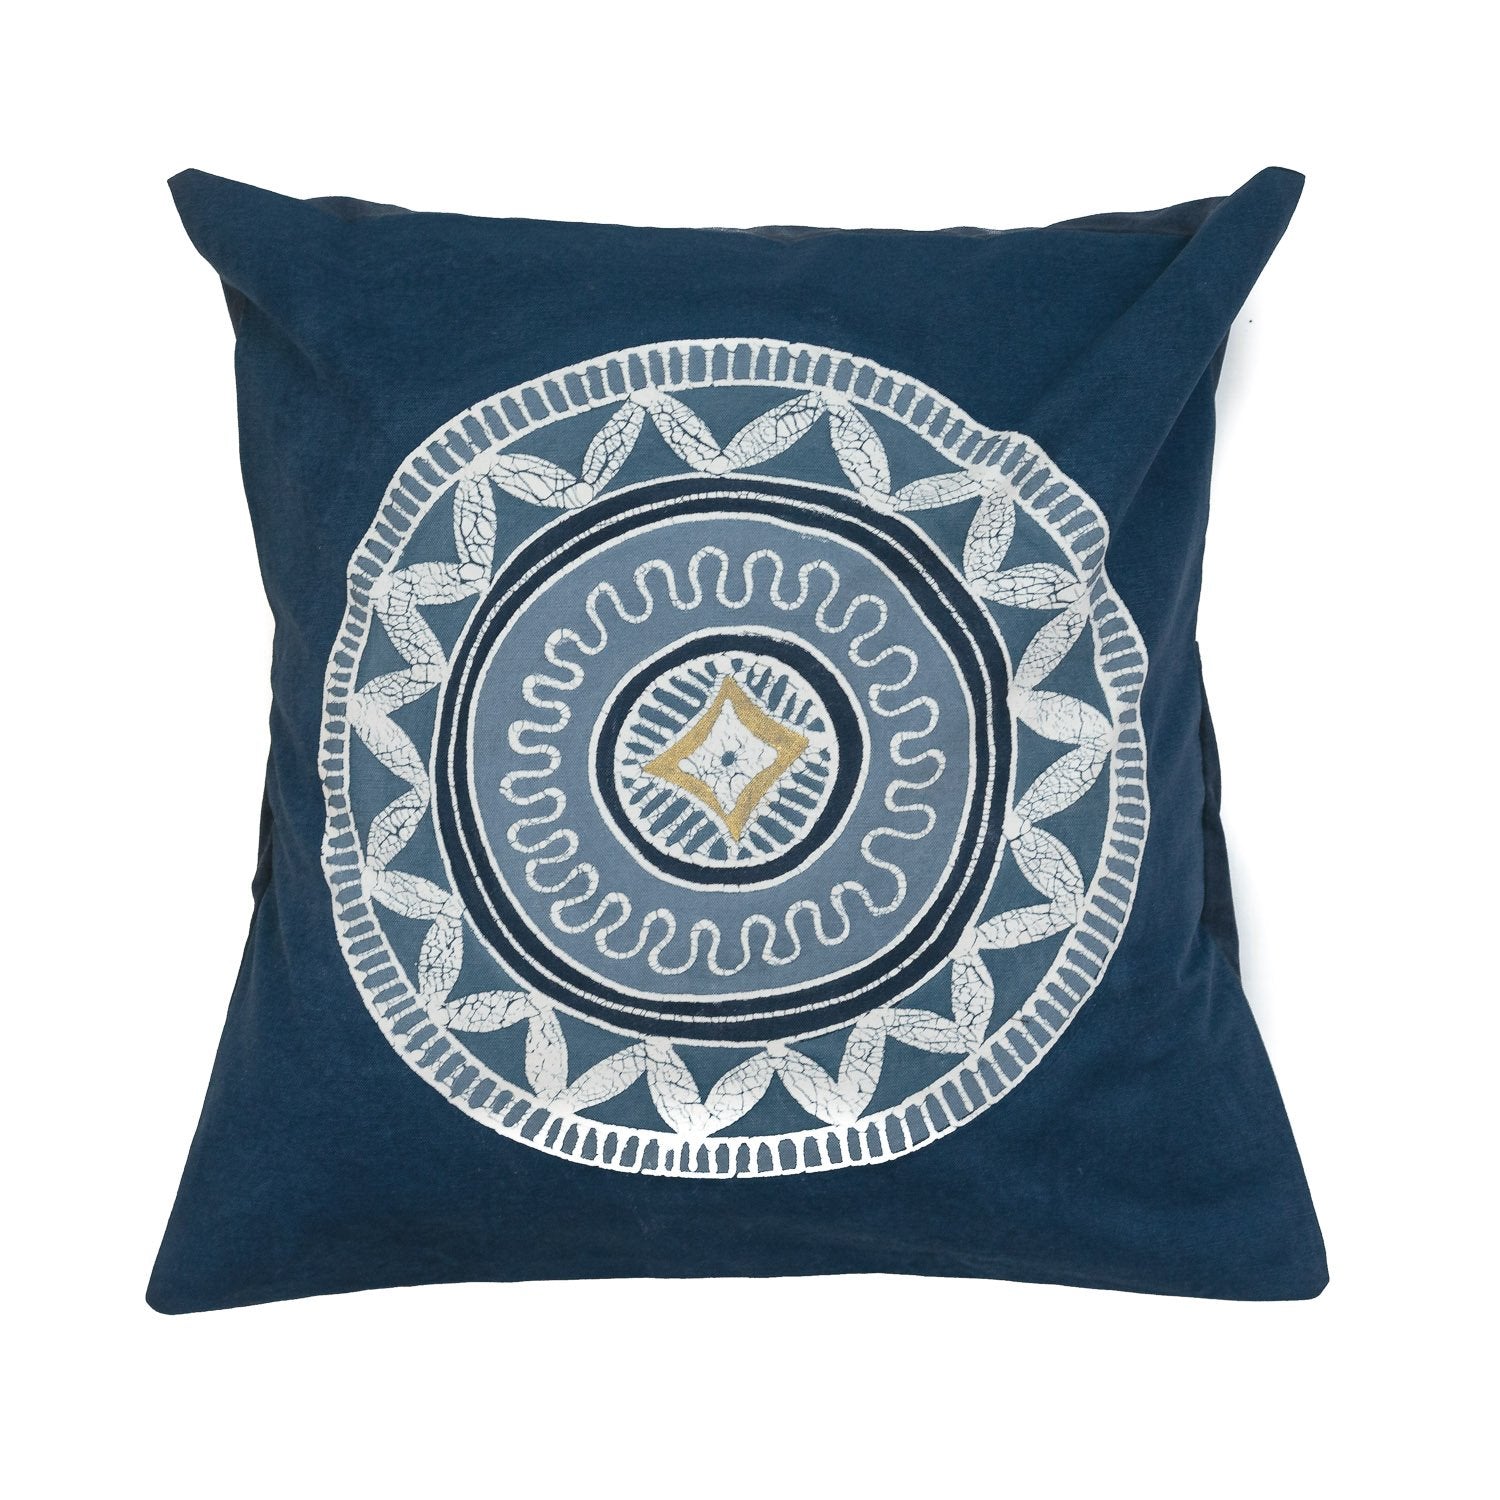 Handpainted cushion cover indigo with circles